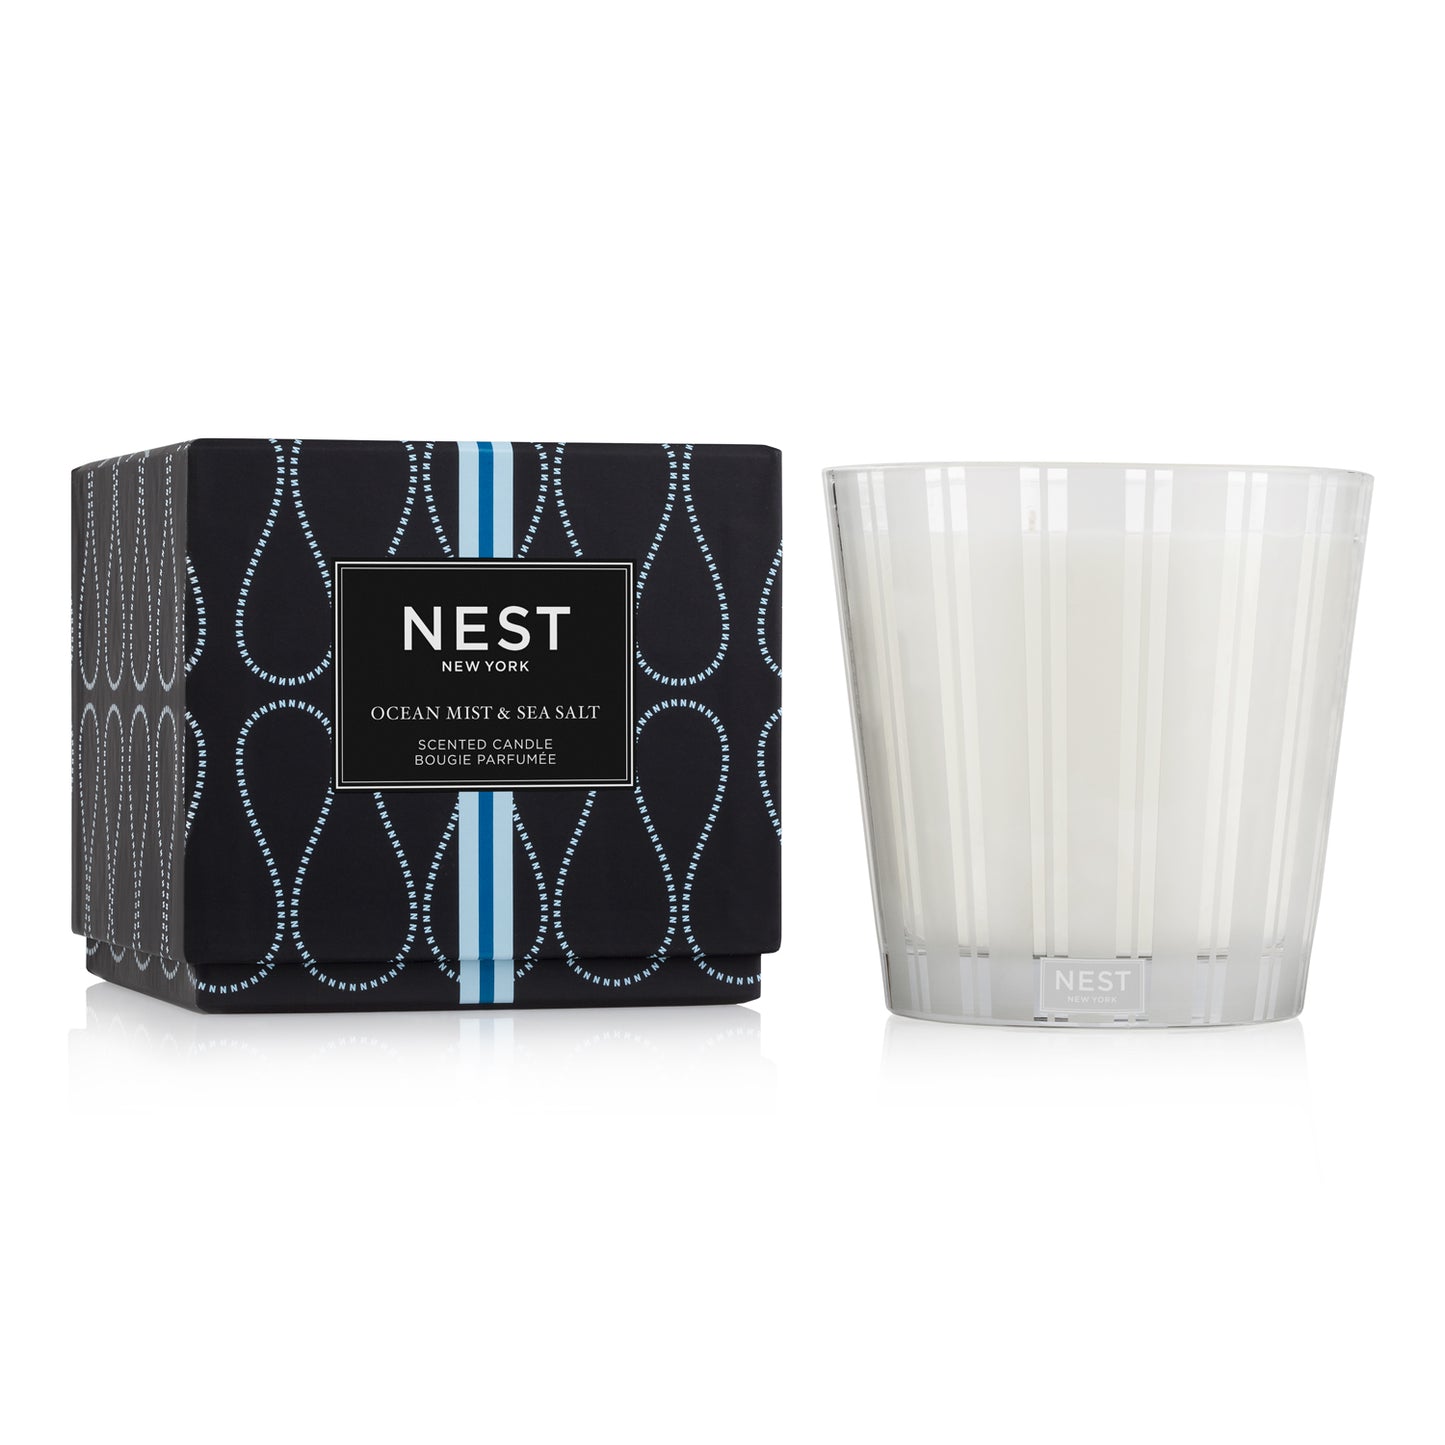 NEST Fragrances, Ocean Mist & Sea Salt 3-Wick Candle